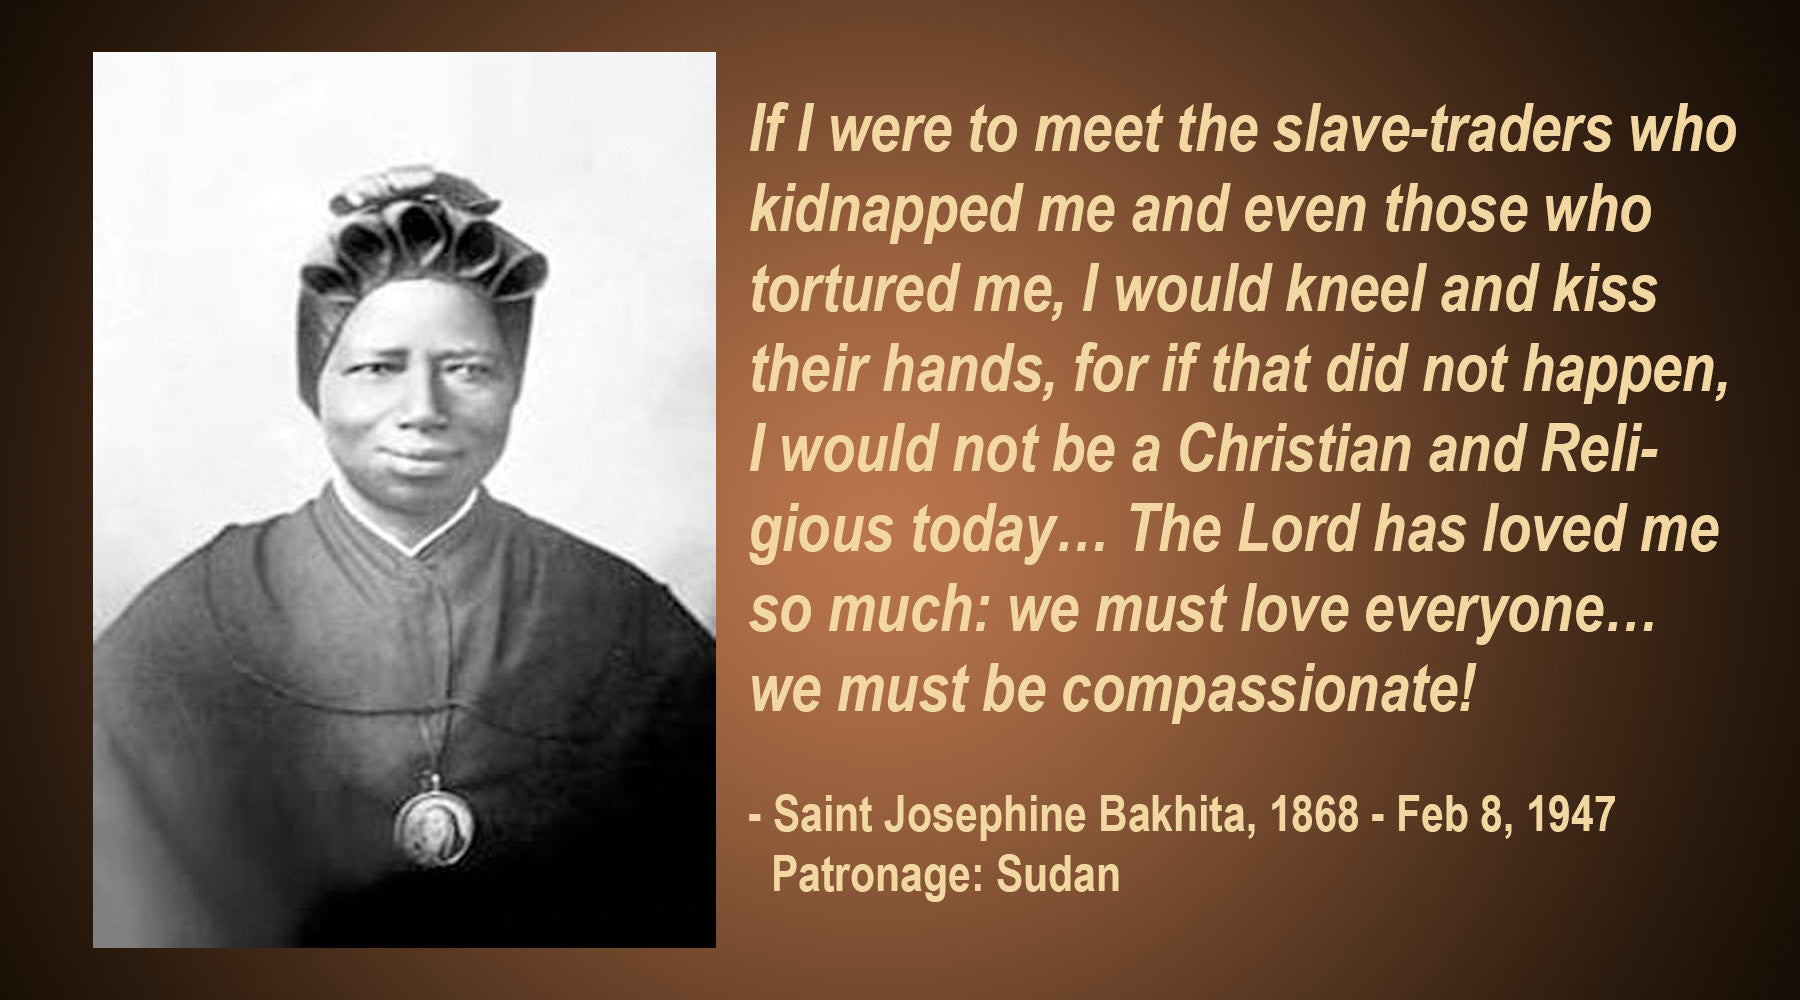 Today Saint Josephine Bakhita's Day